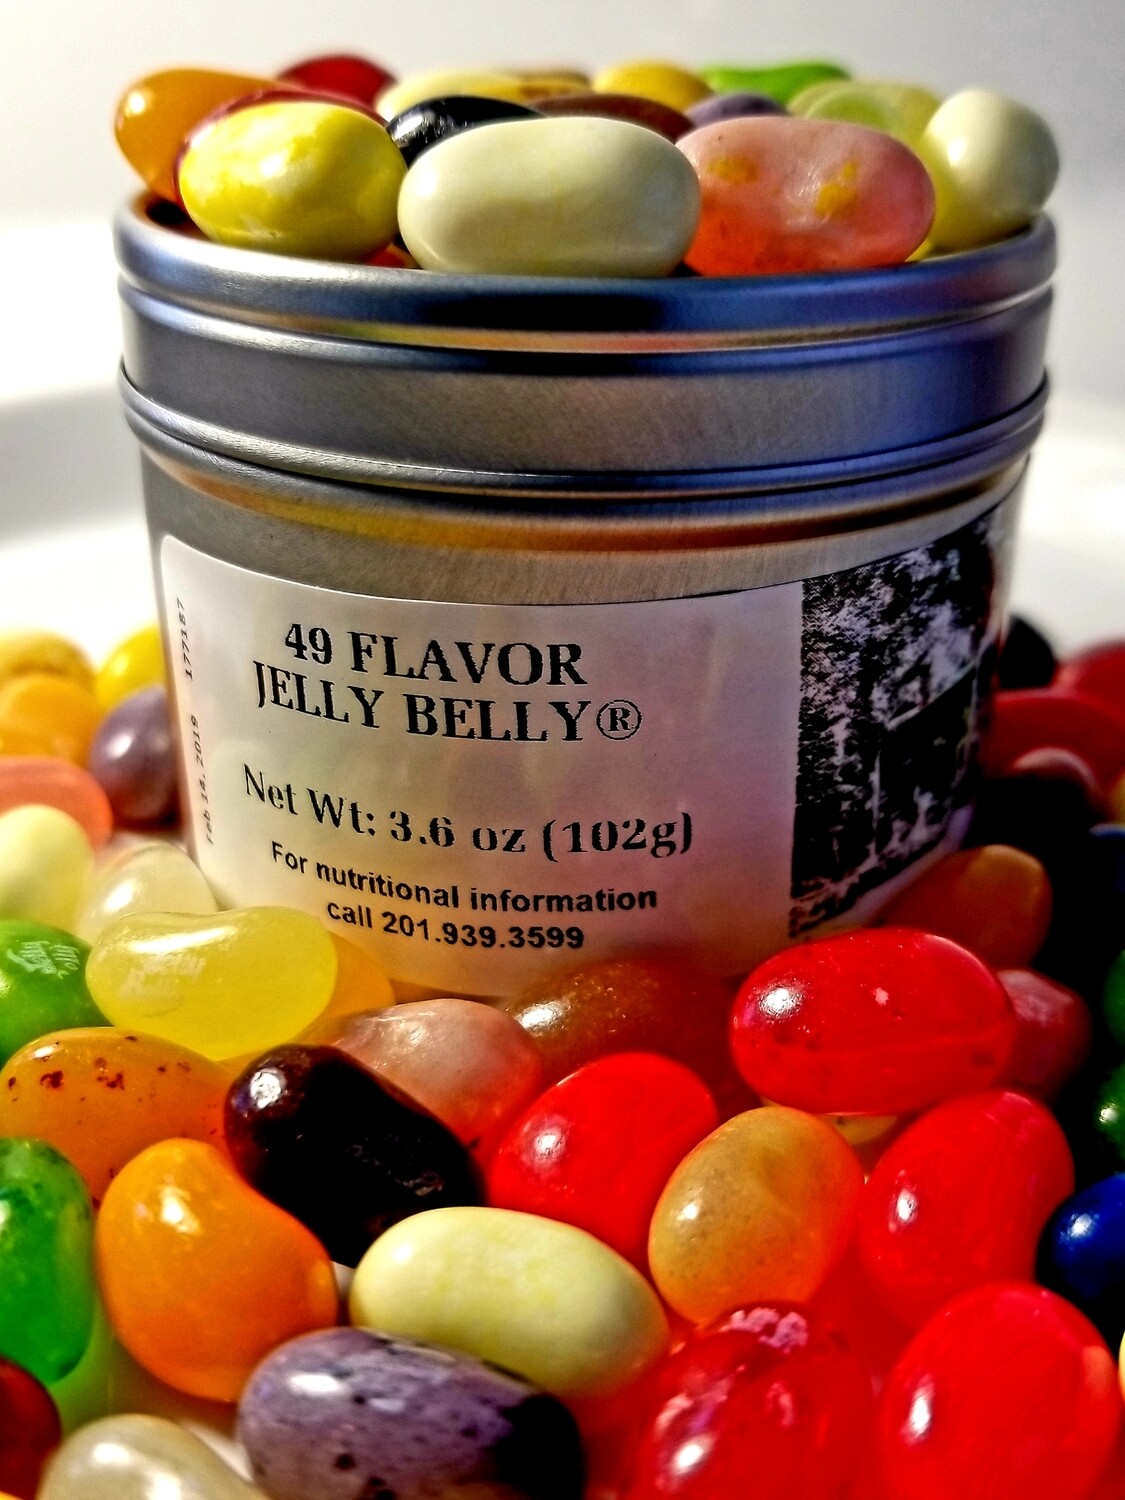 Glendower Farm Jelly Belly 49 Flavor Jelly Beans 4oz Tin